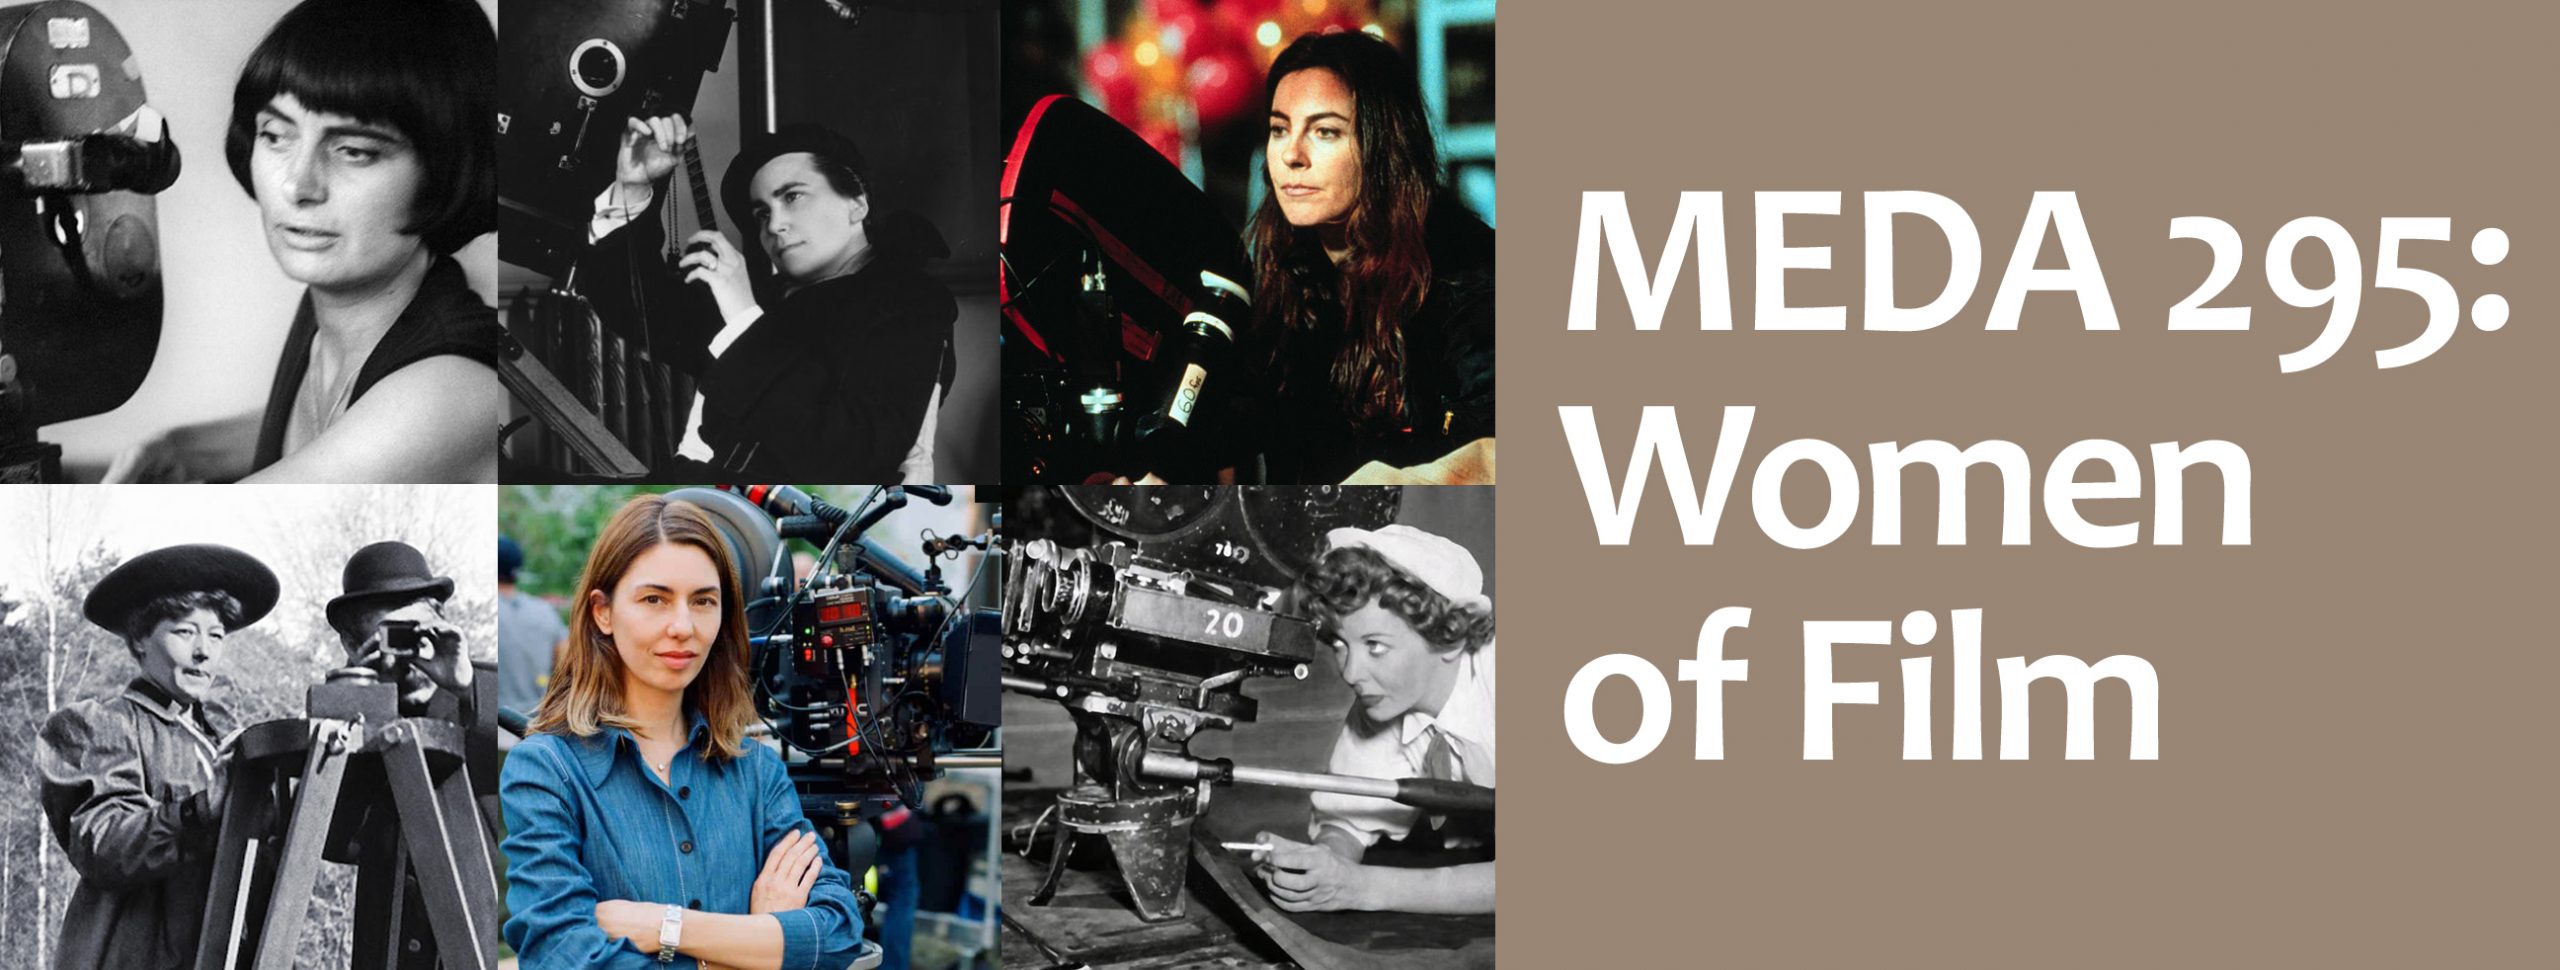 Women of Film